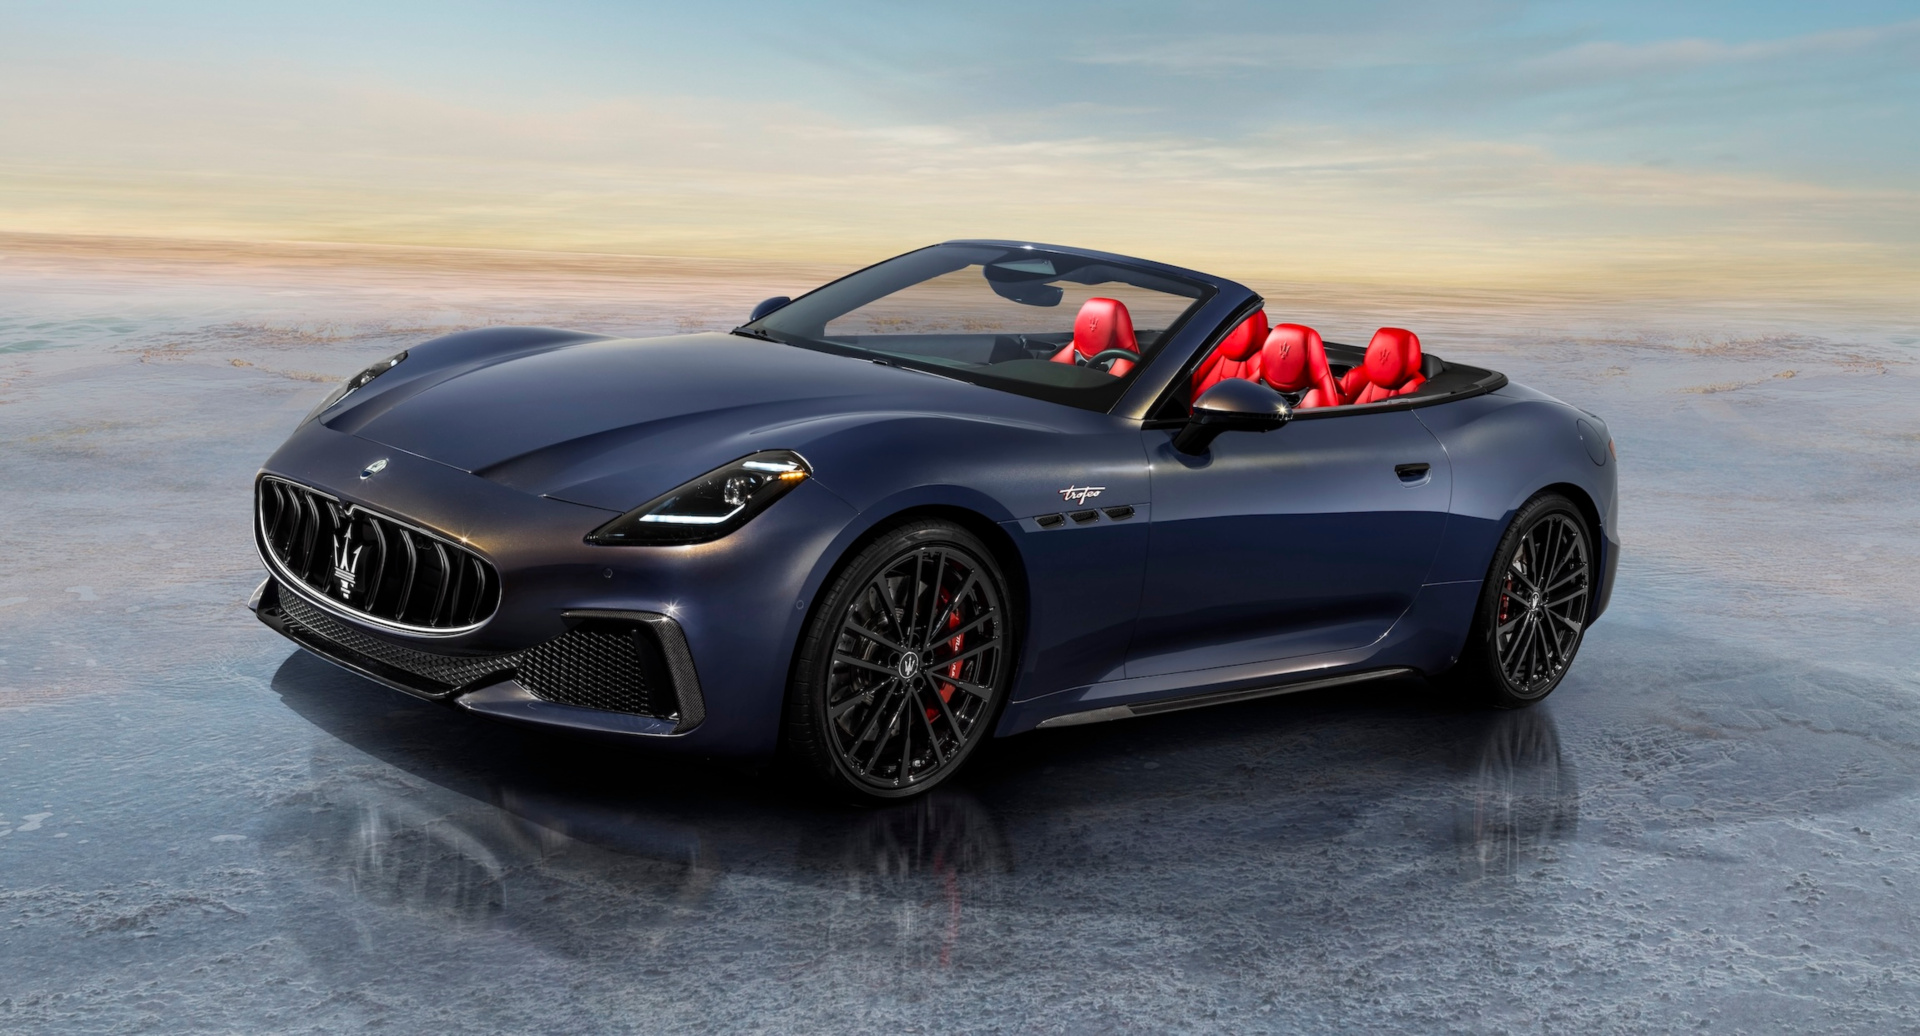 SMALL_圖1- 全新 Maserati GranCabrio 誕生 全球驚艷亮相！